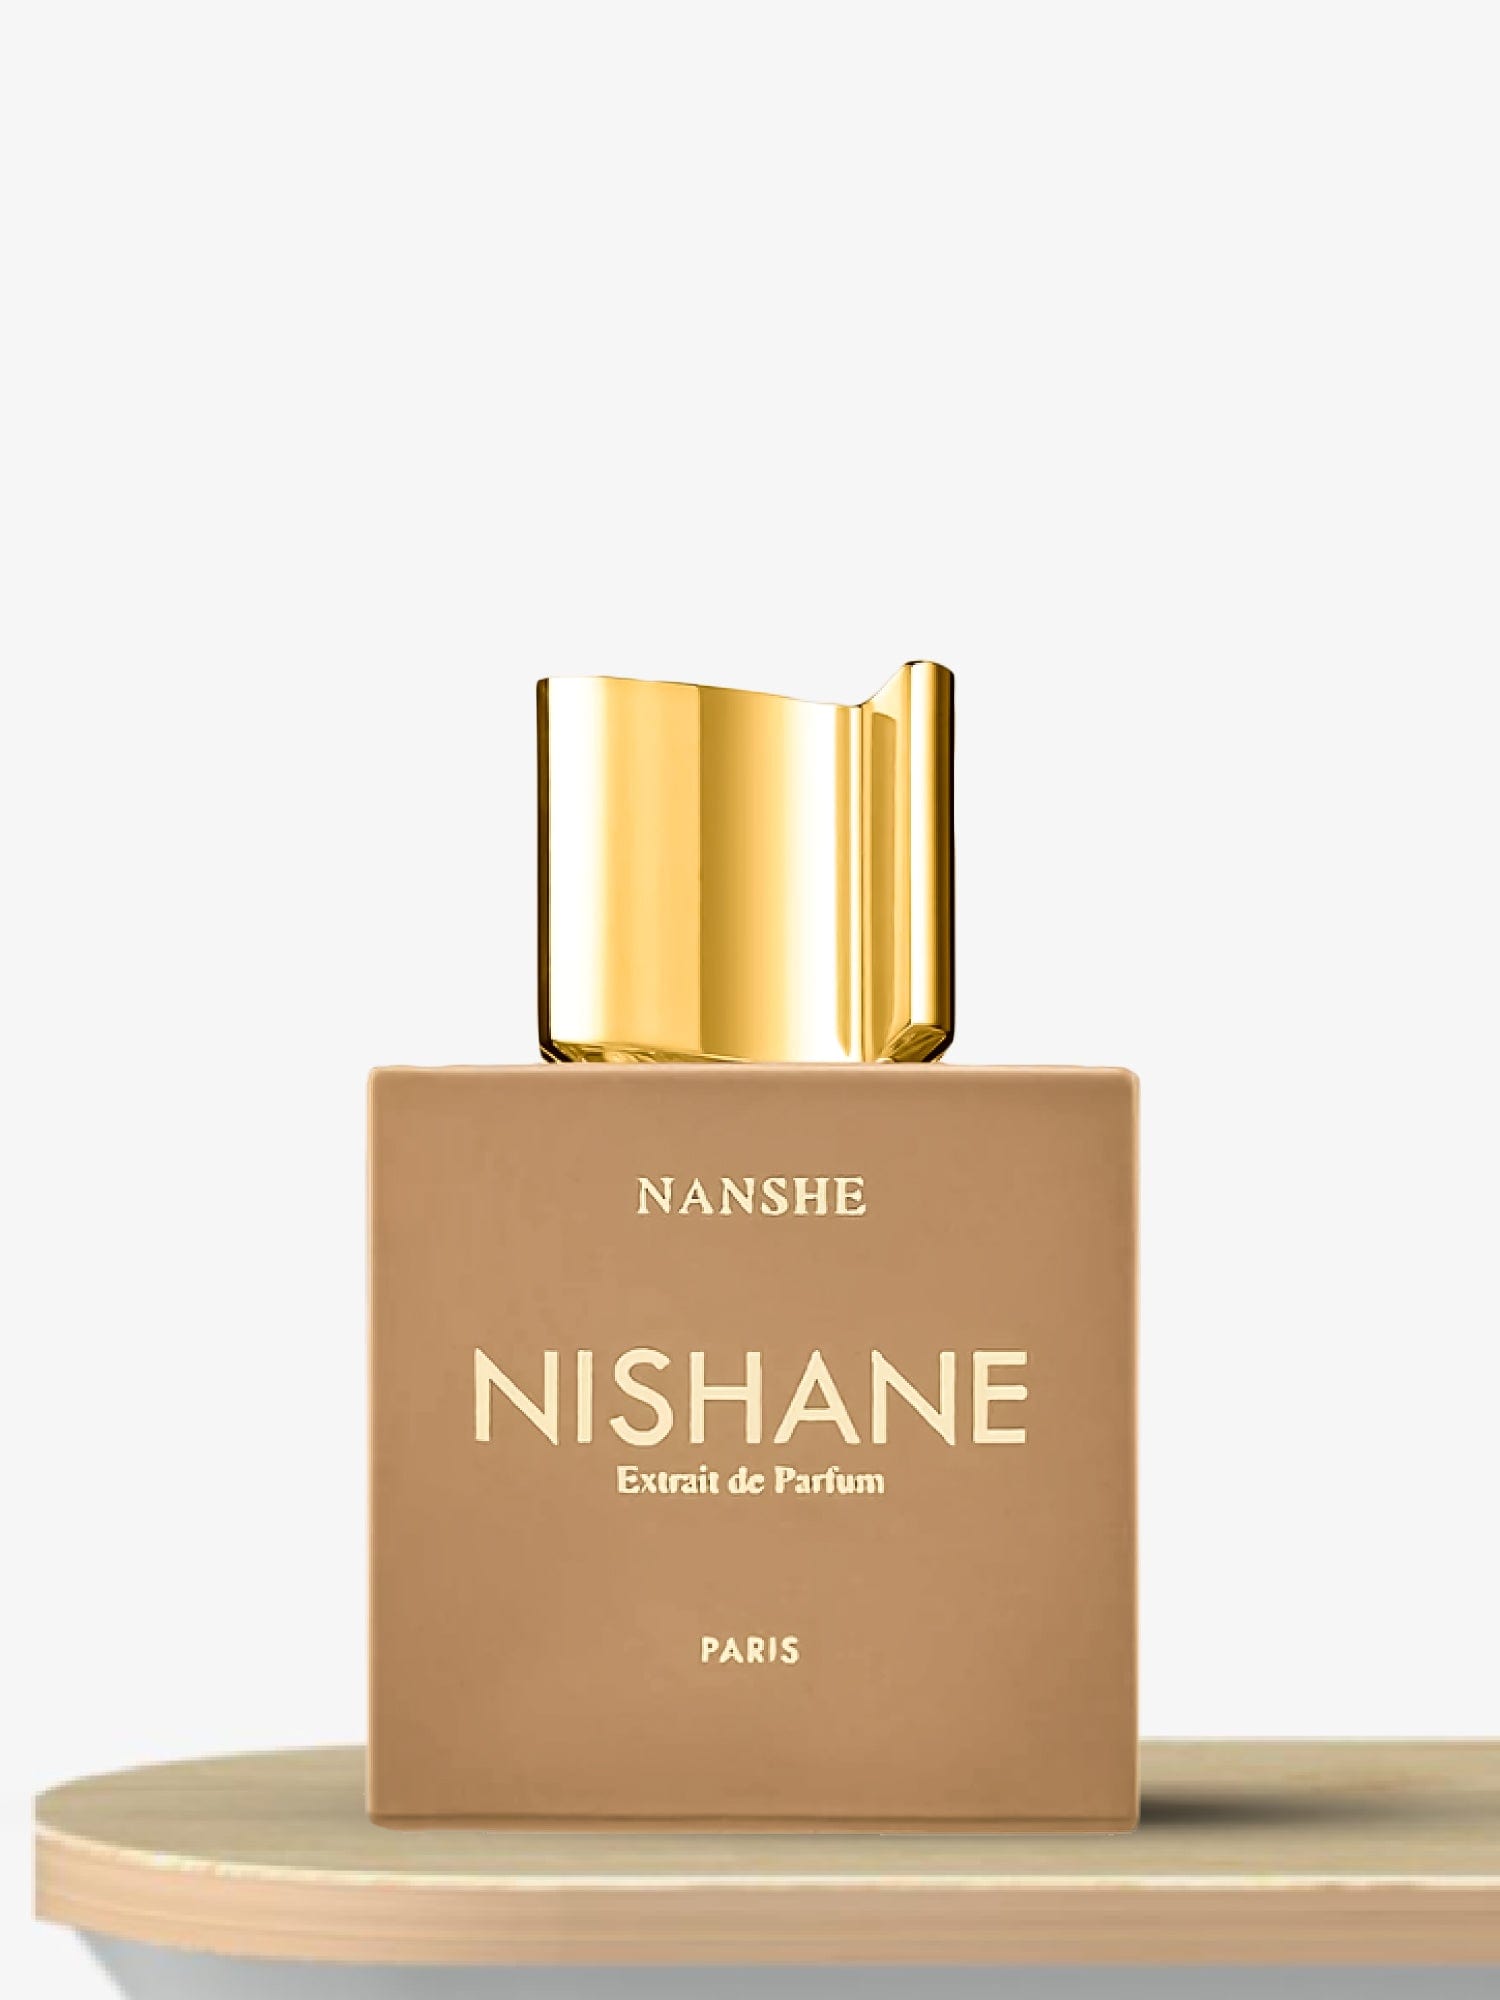 Nishane Nanshe Extrait de Parfum 100 mL / Unisex